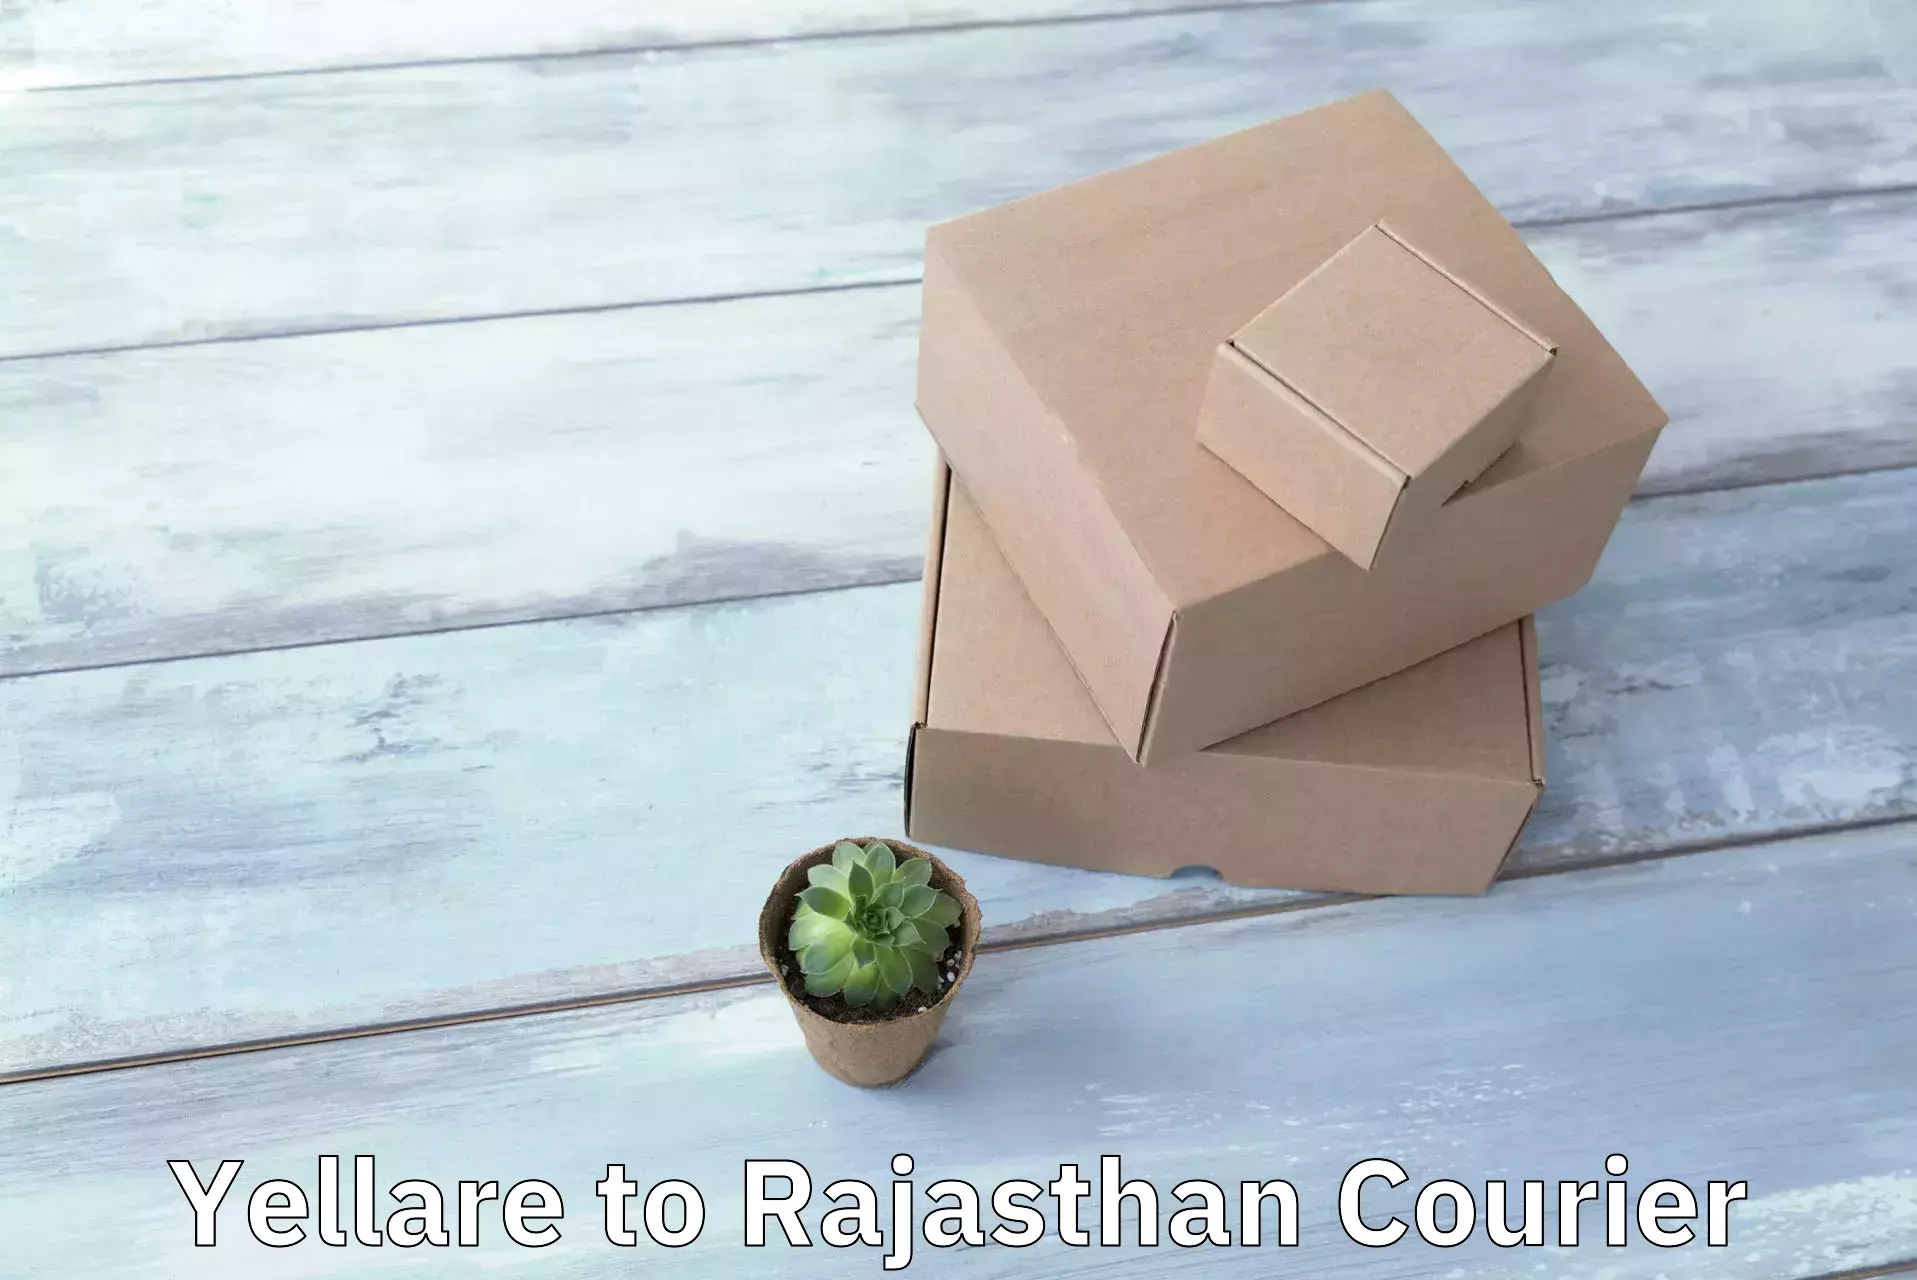 Efficient cargo handling Yellare to Rajasthan